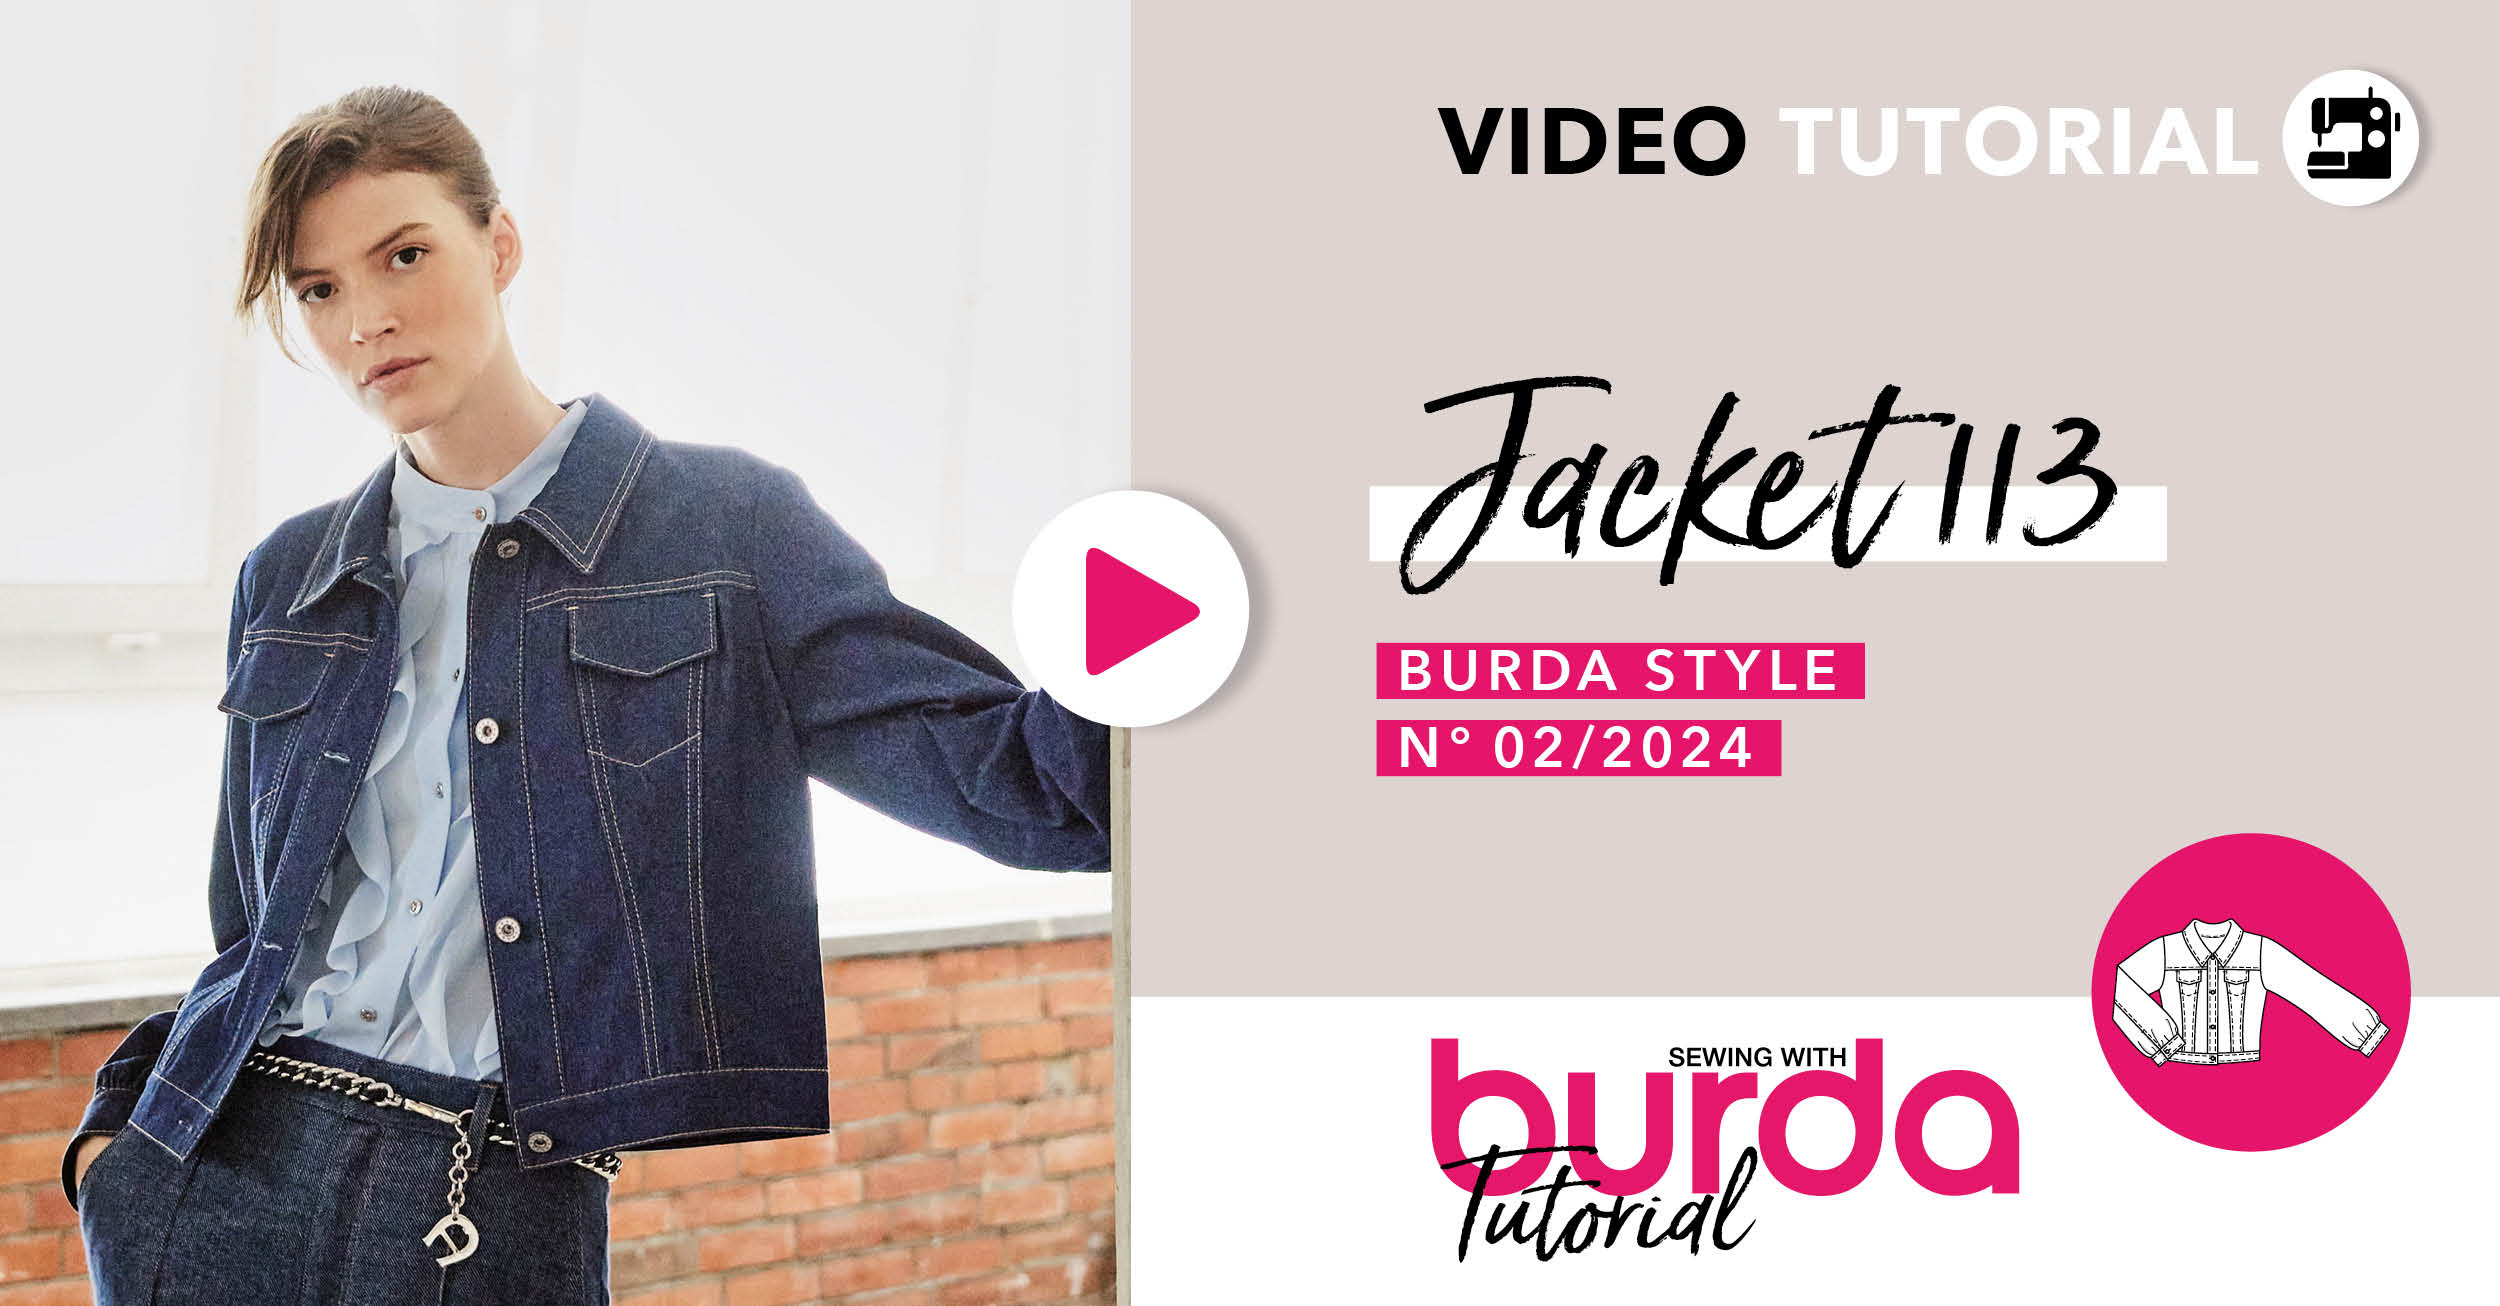 Video Tutorial: Denim Jacket 113 - Burda Style February 2024